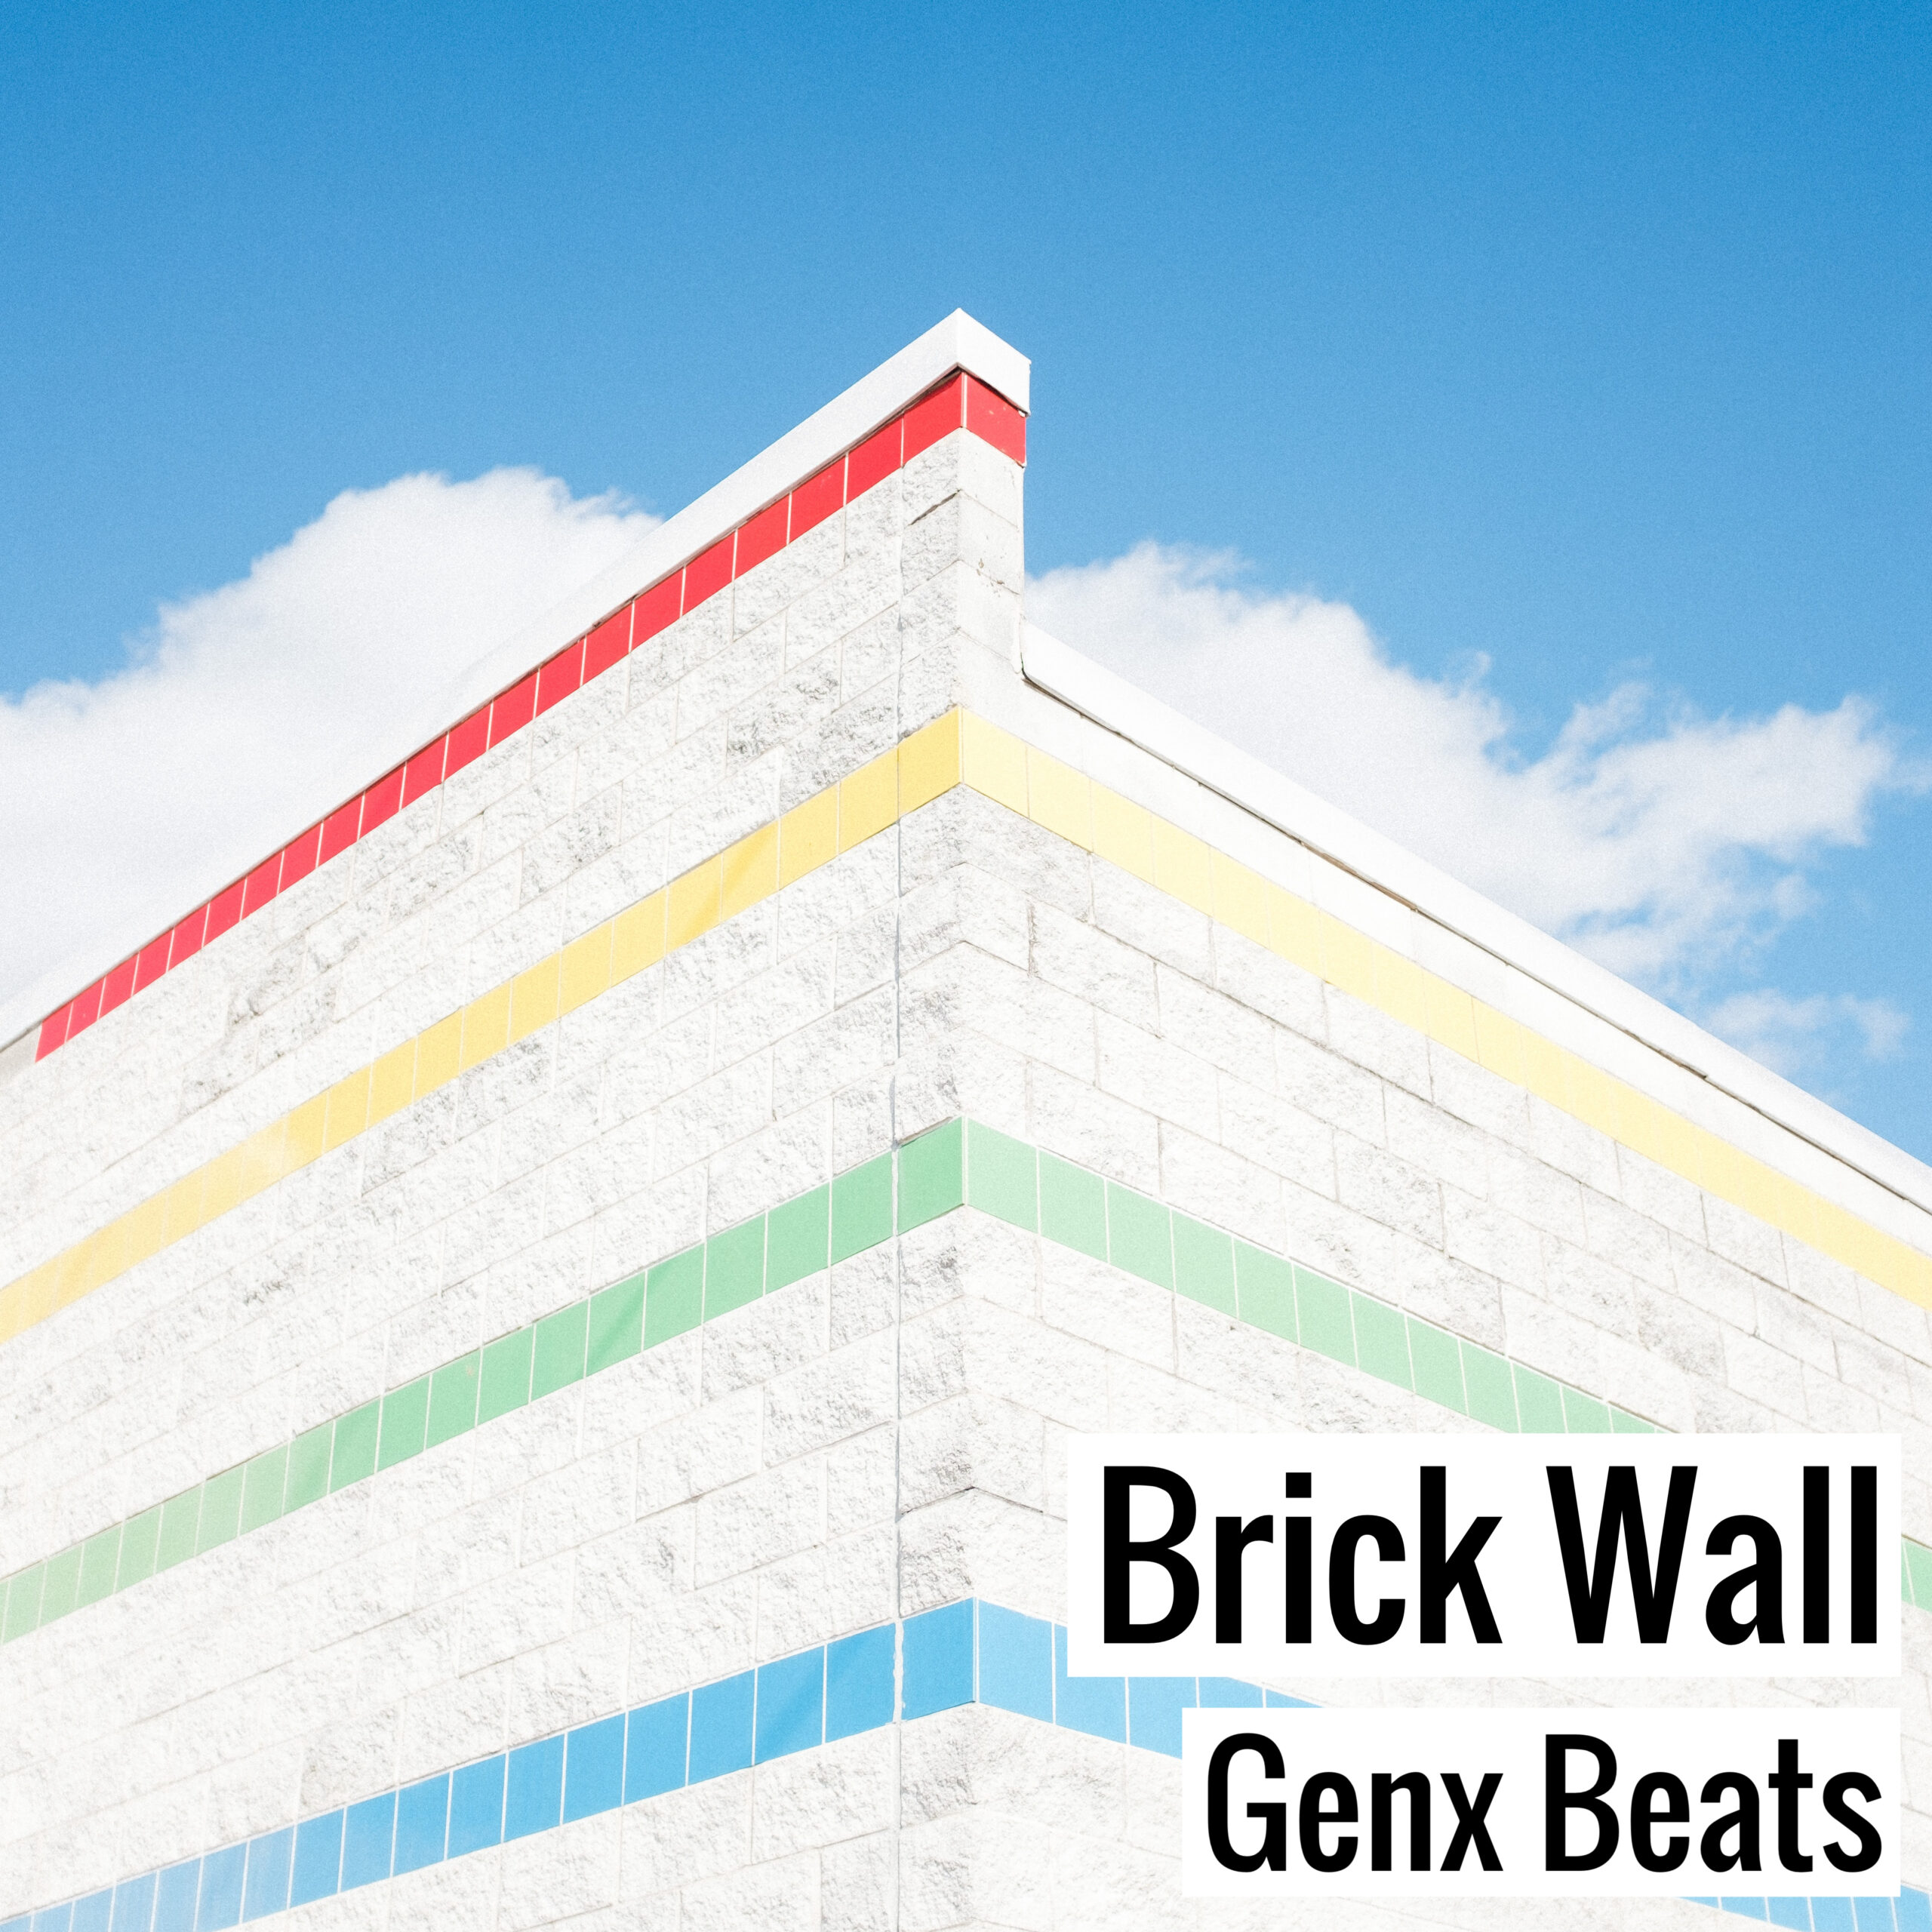 Brick Wall scaled